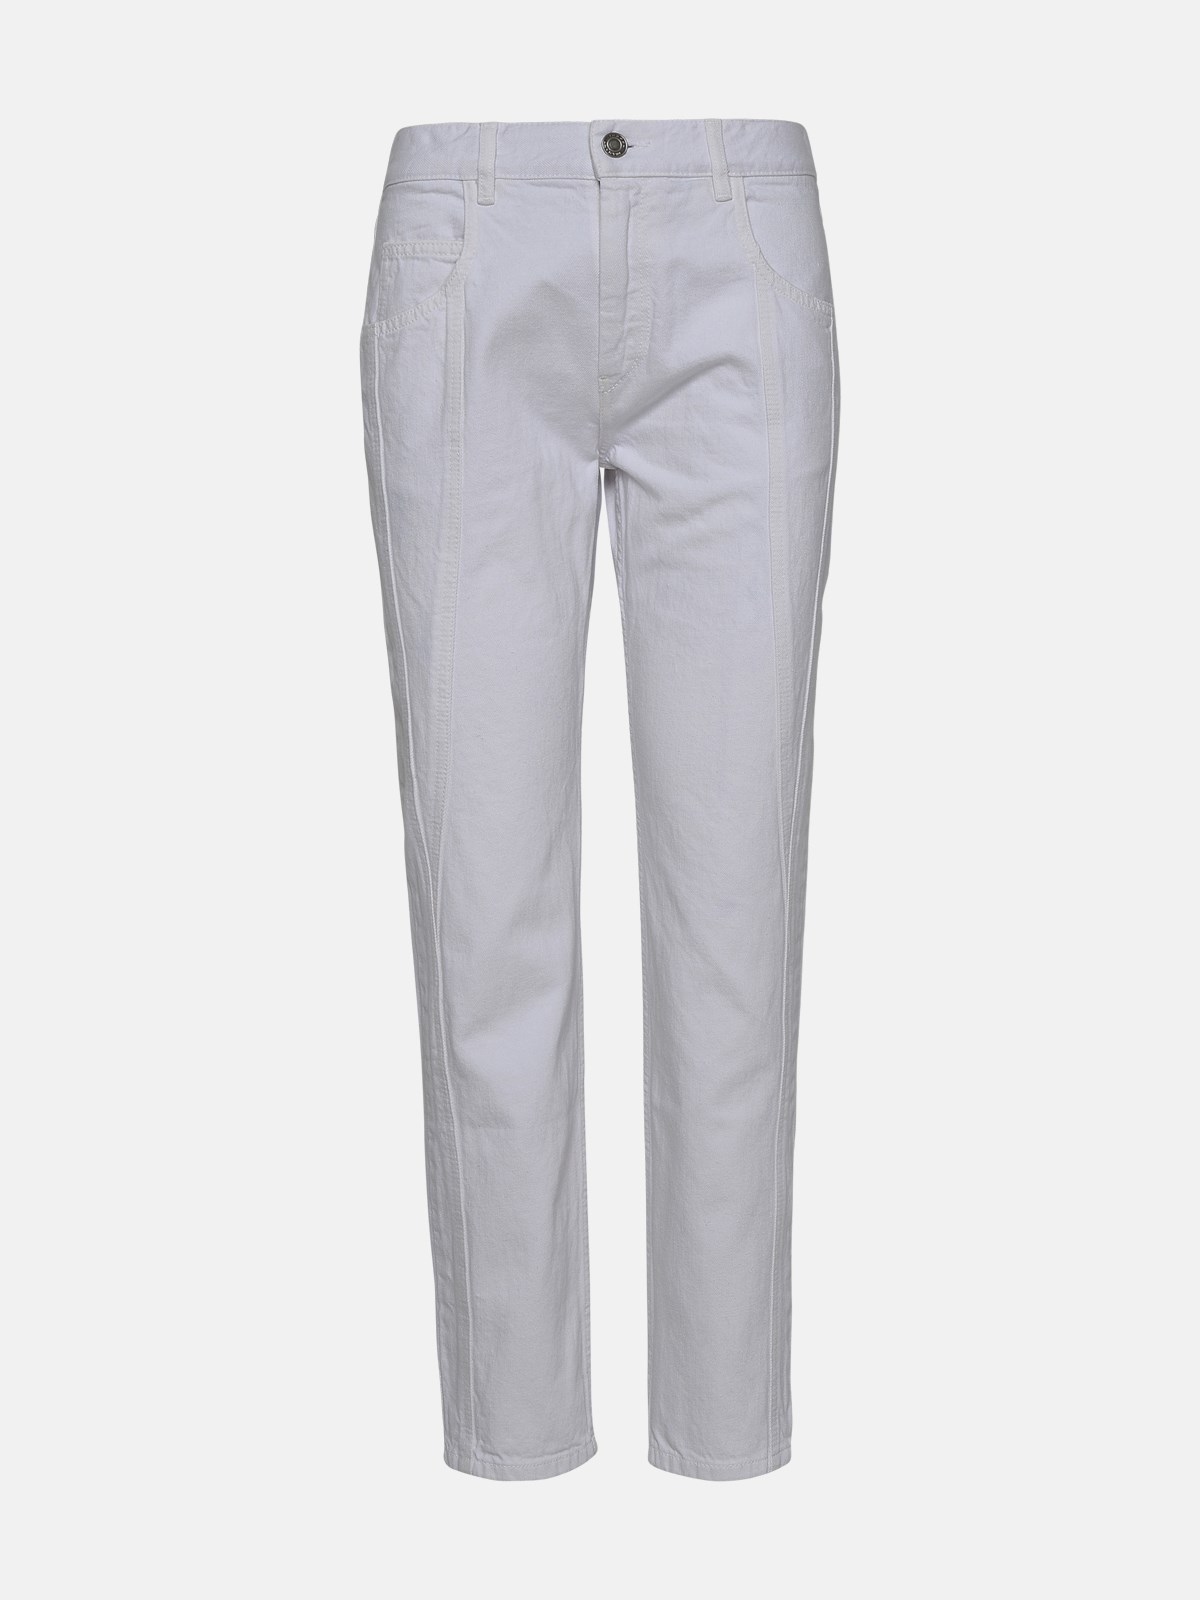 Isabel Marant White Cotton Denim  Capsule Jeans